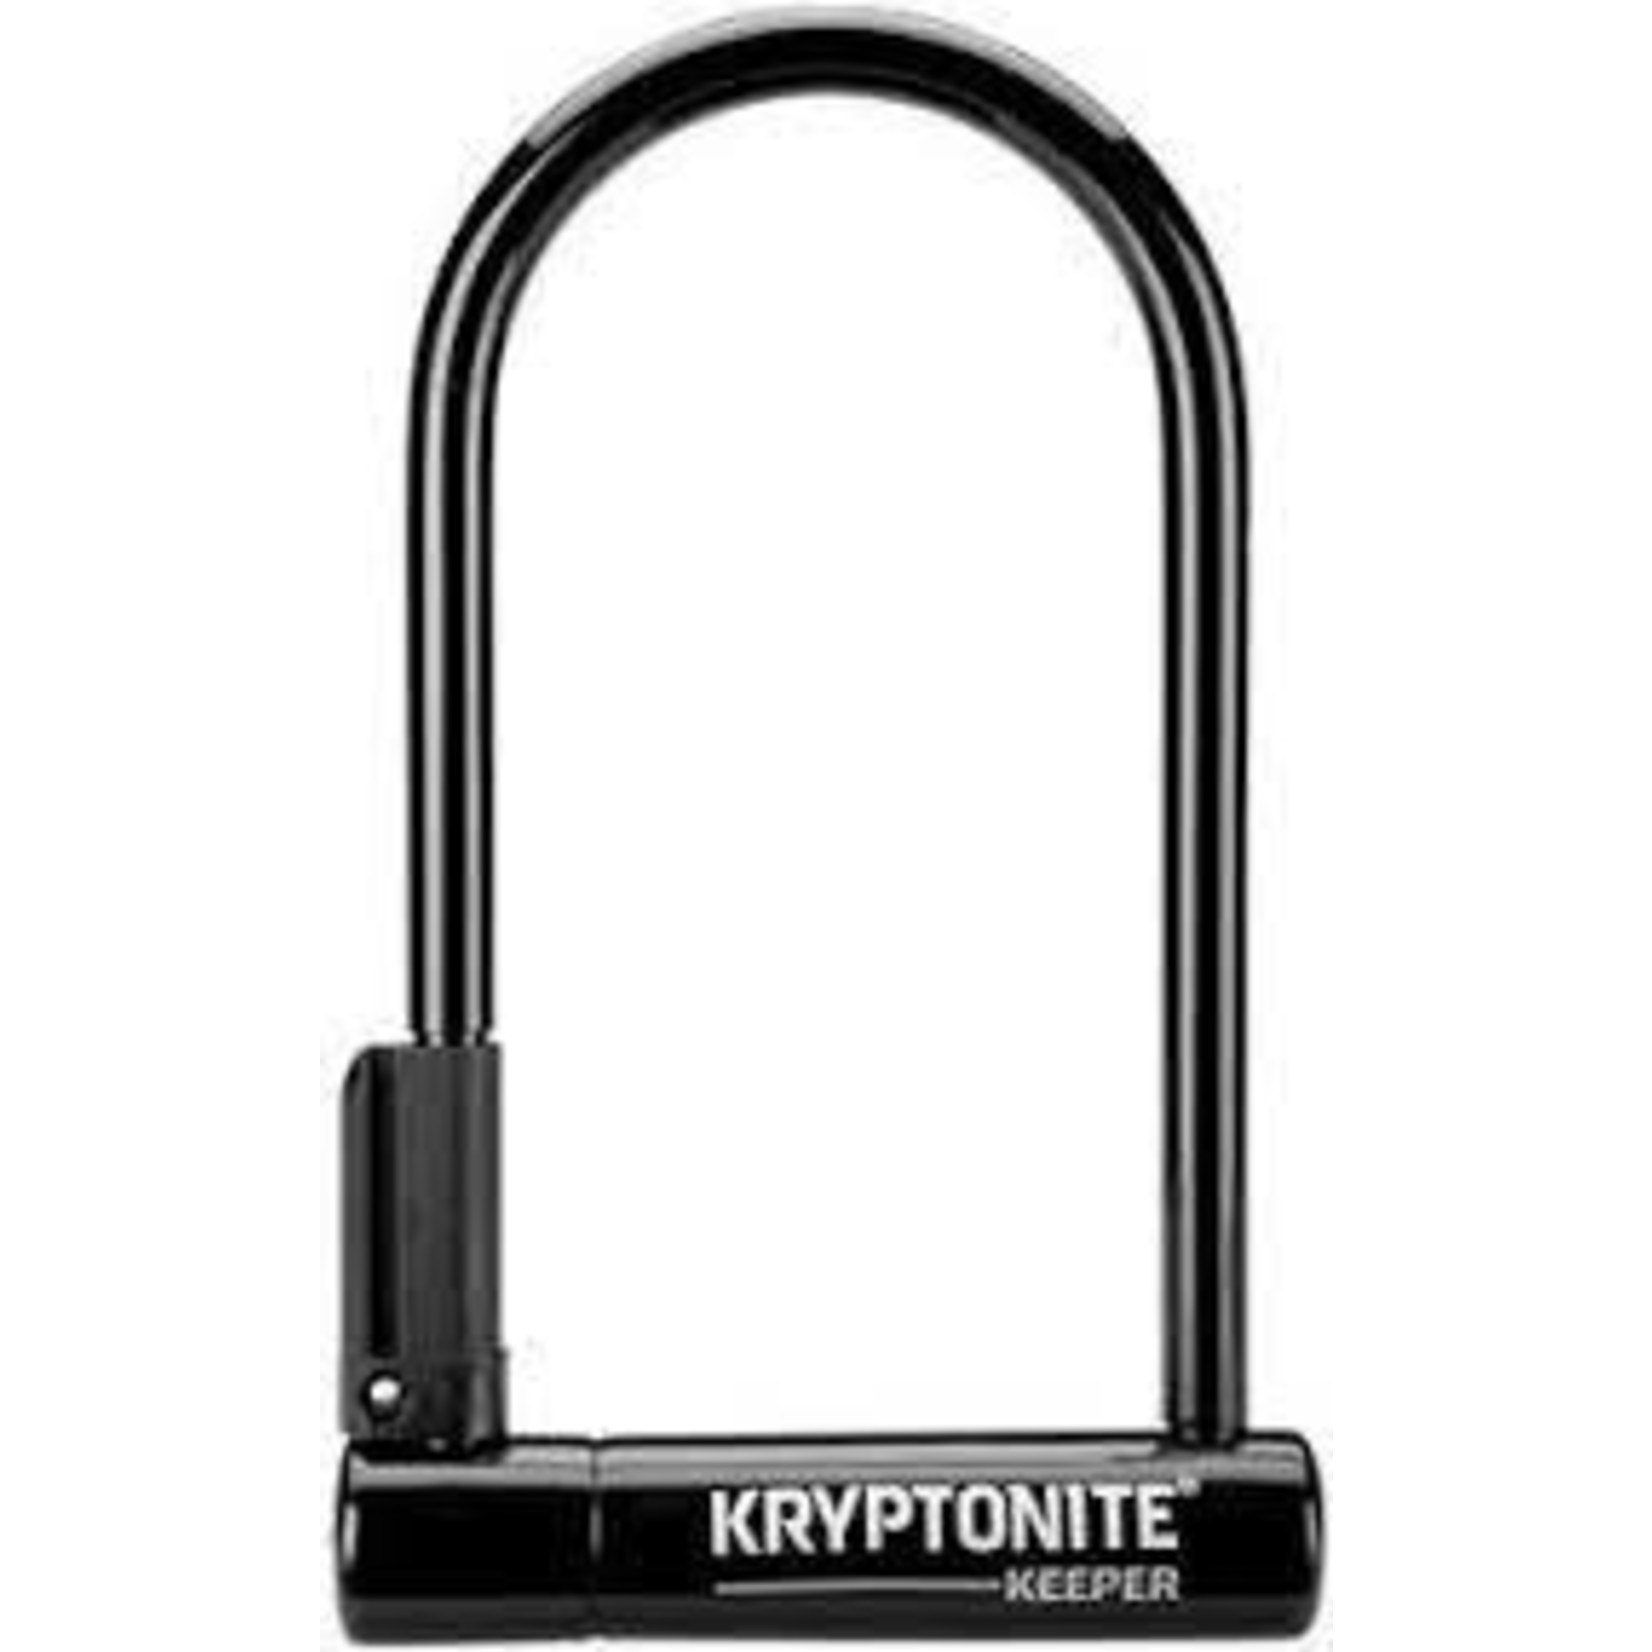 Kryptonite Kryptonite Keeper Lock 12 STD 4 x 8 U Lock